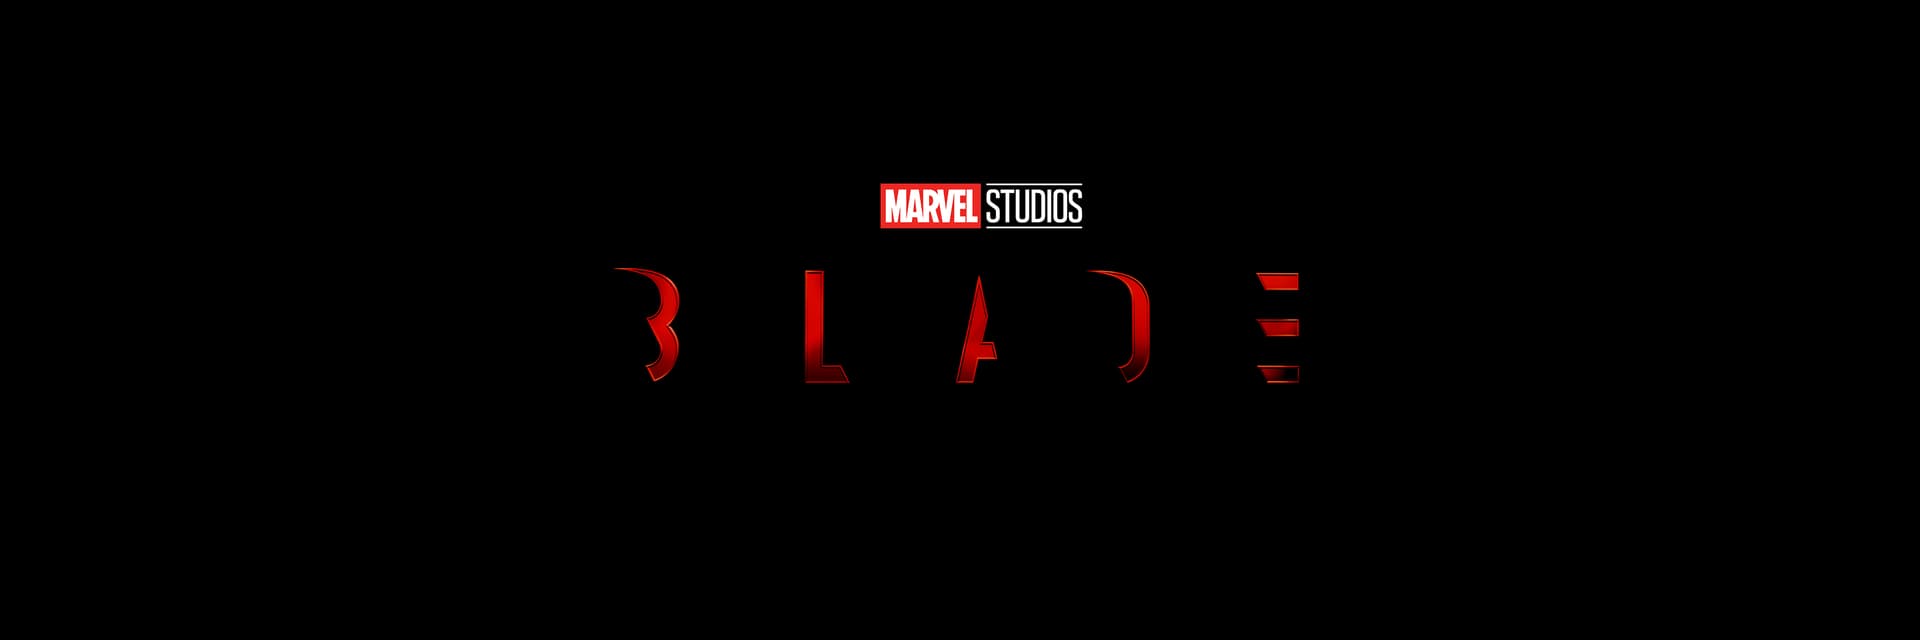 Marvel Studios Blade Movie Logo on Black